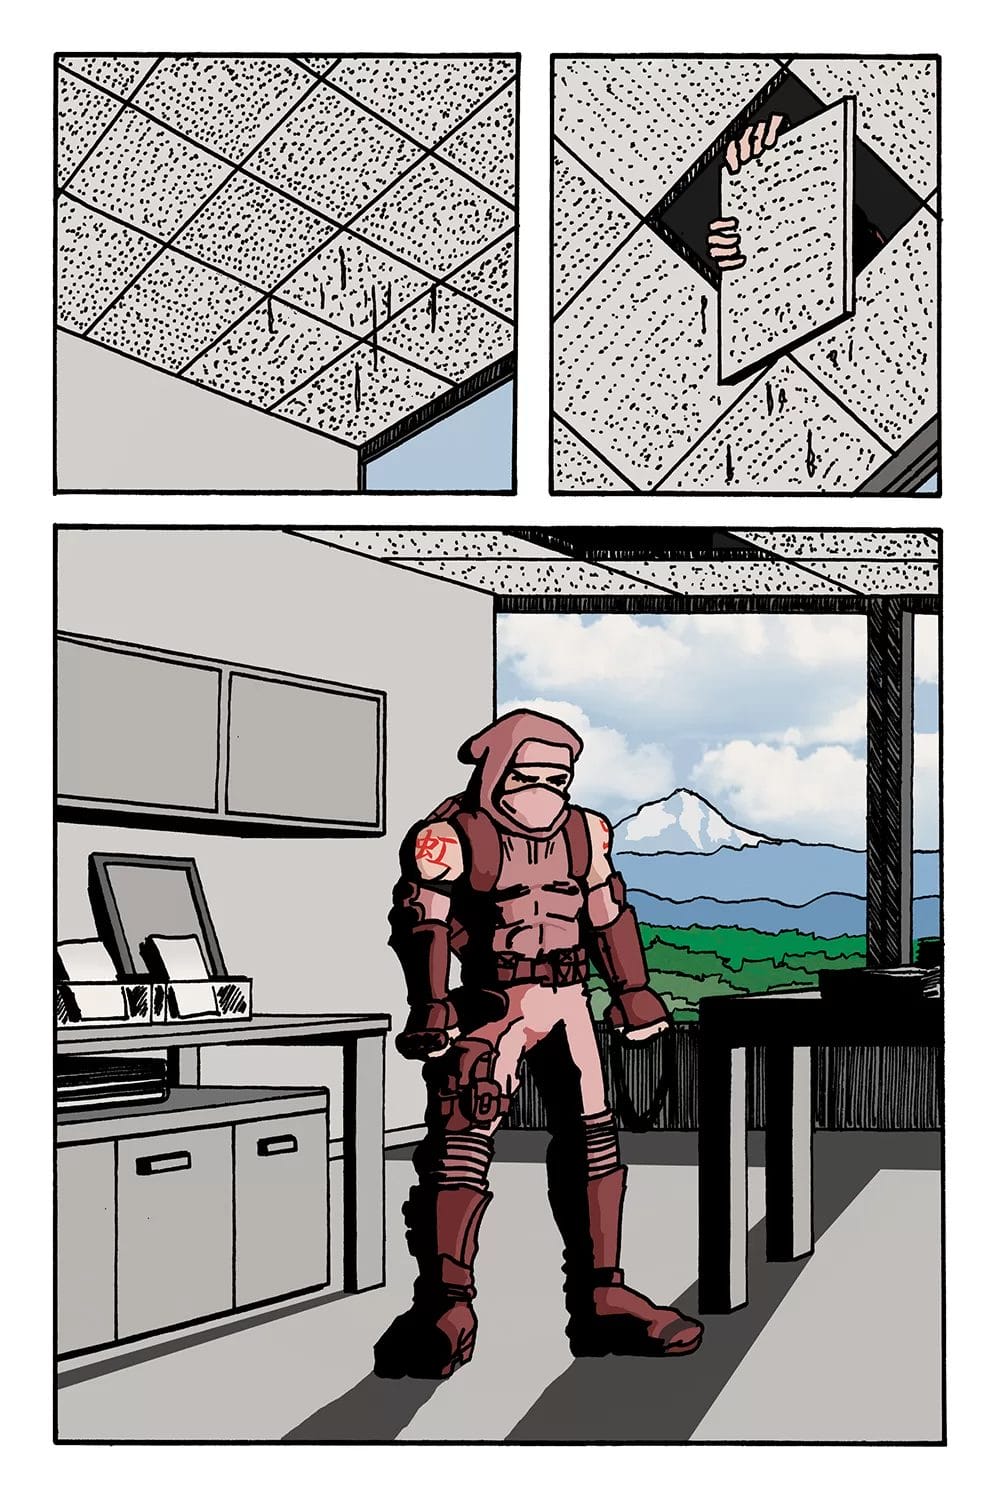 The ninja enters an office. 